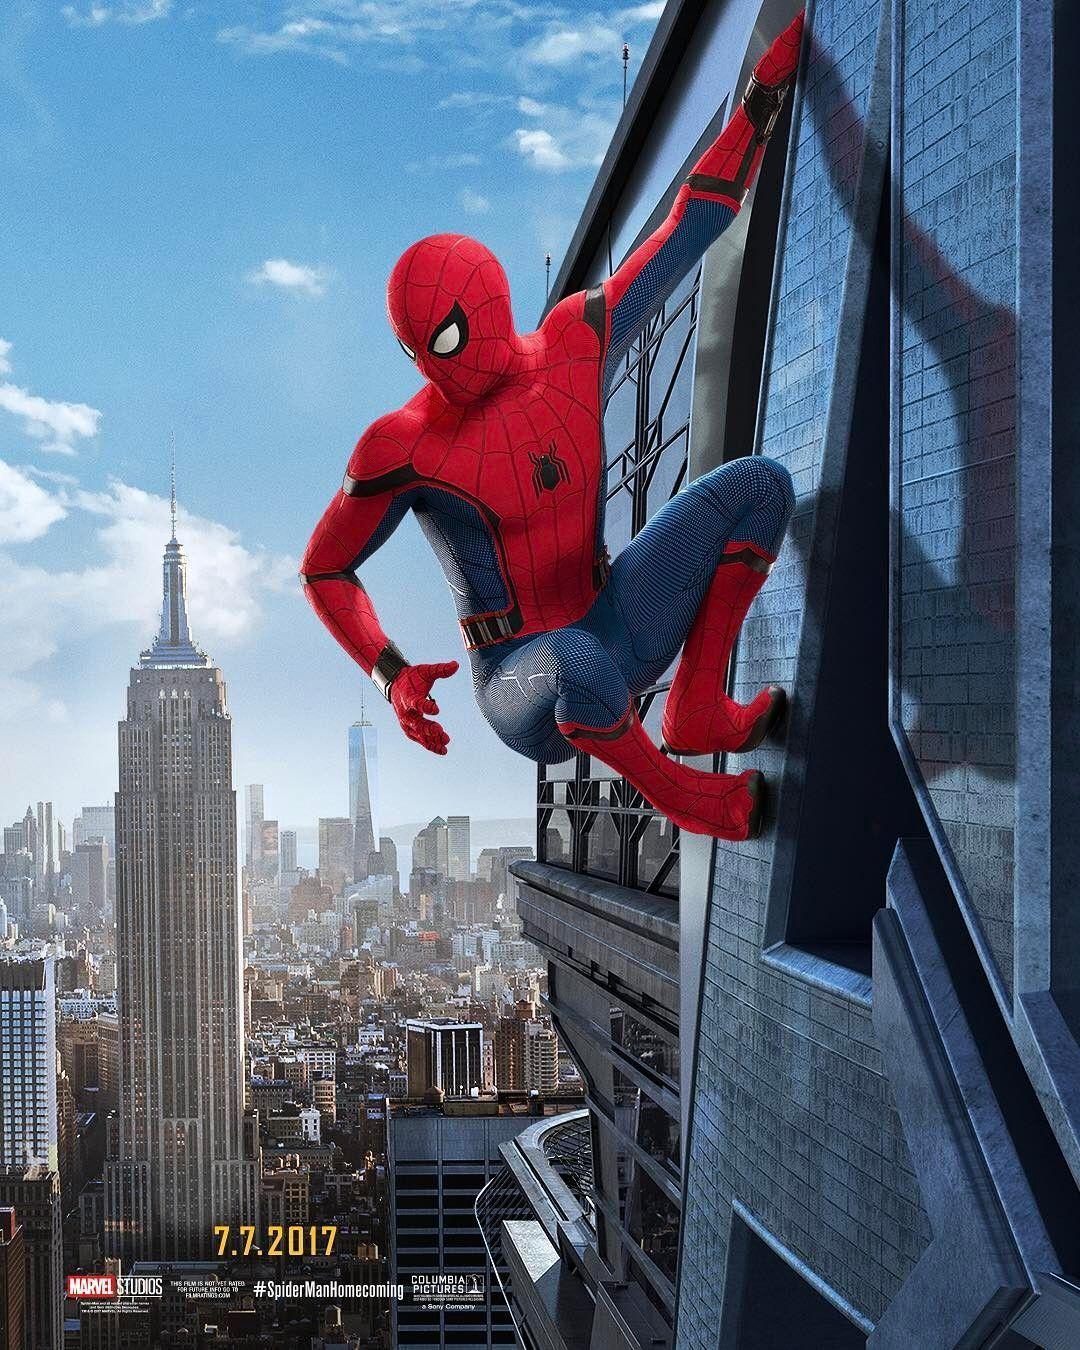 Spiderman Homecoming 2017 Wallpaper. Movie Stills Image 1080p